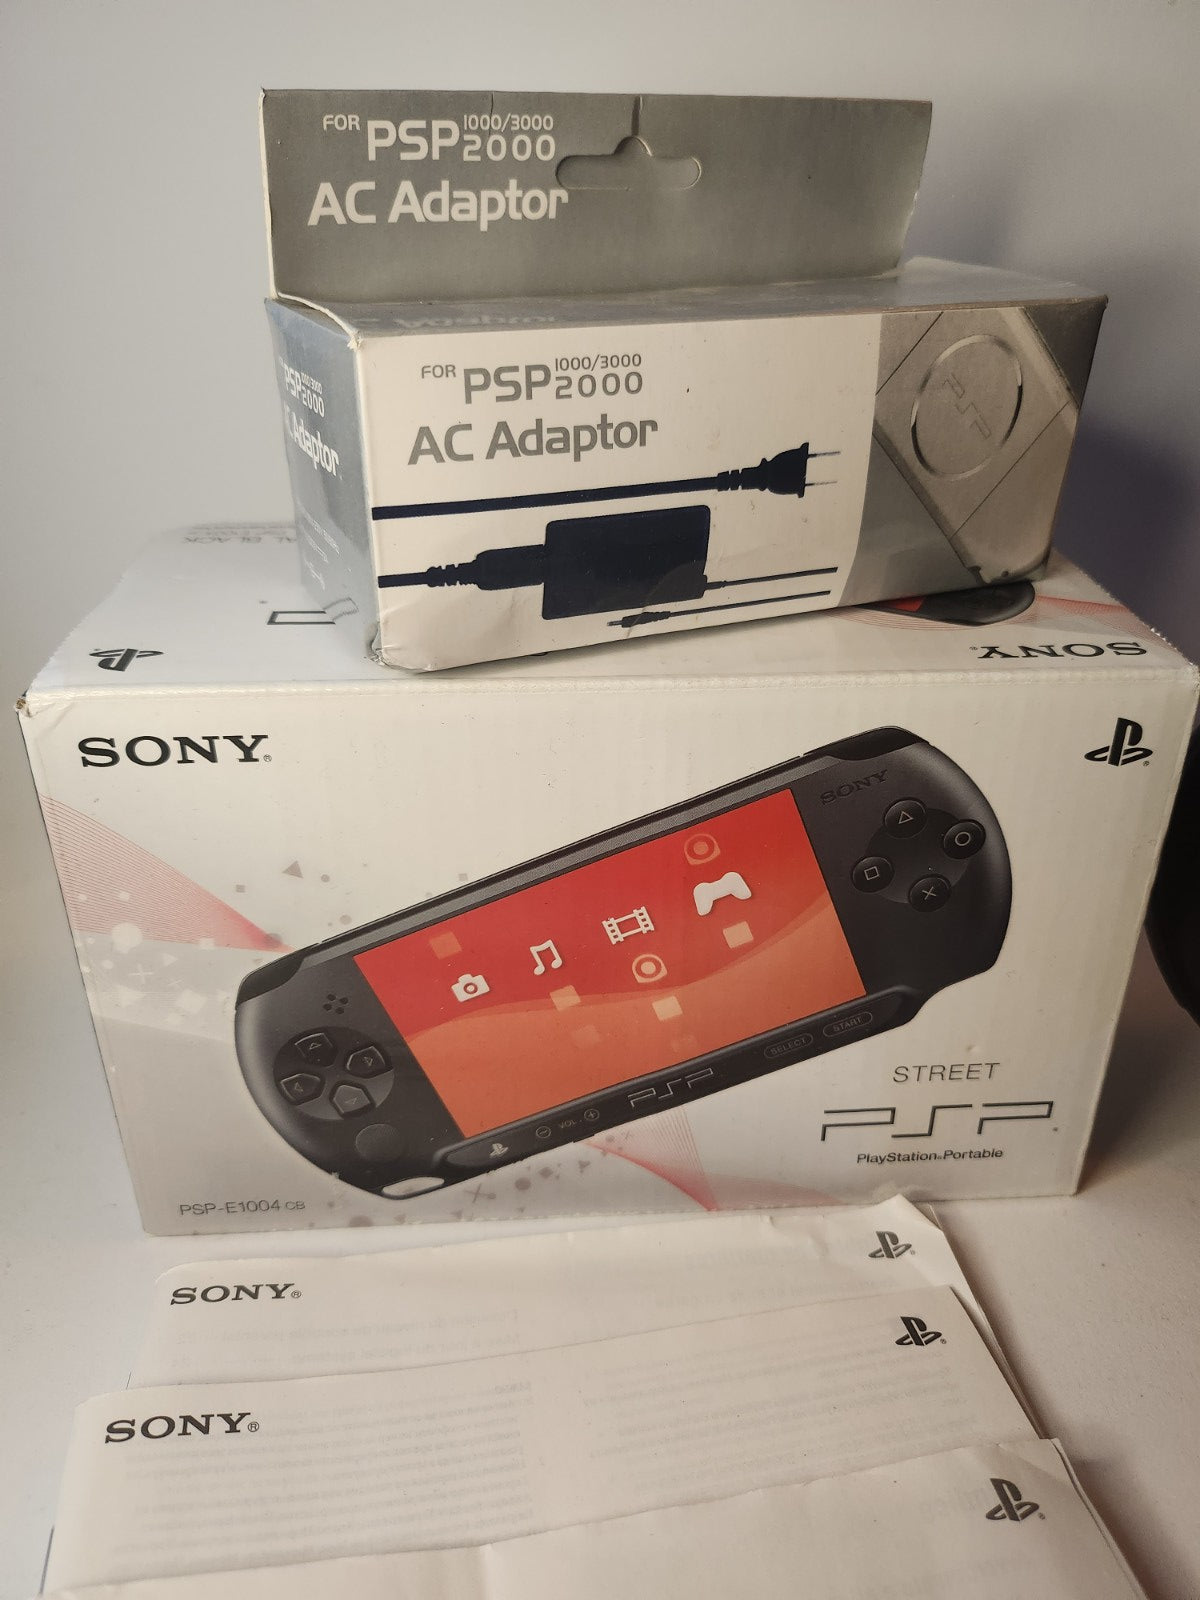 Sony Playstation Portable (PSP) Street Black E1004cb in doos